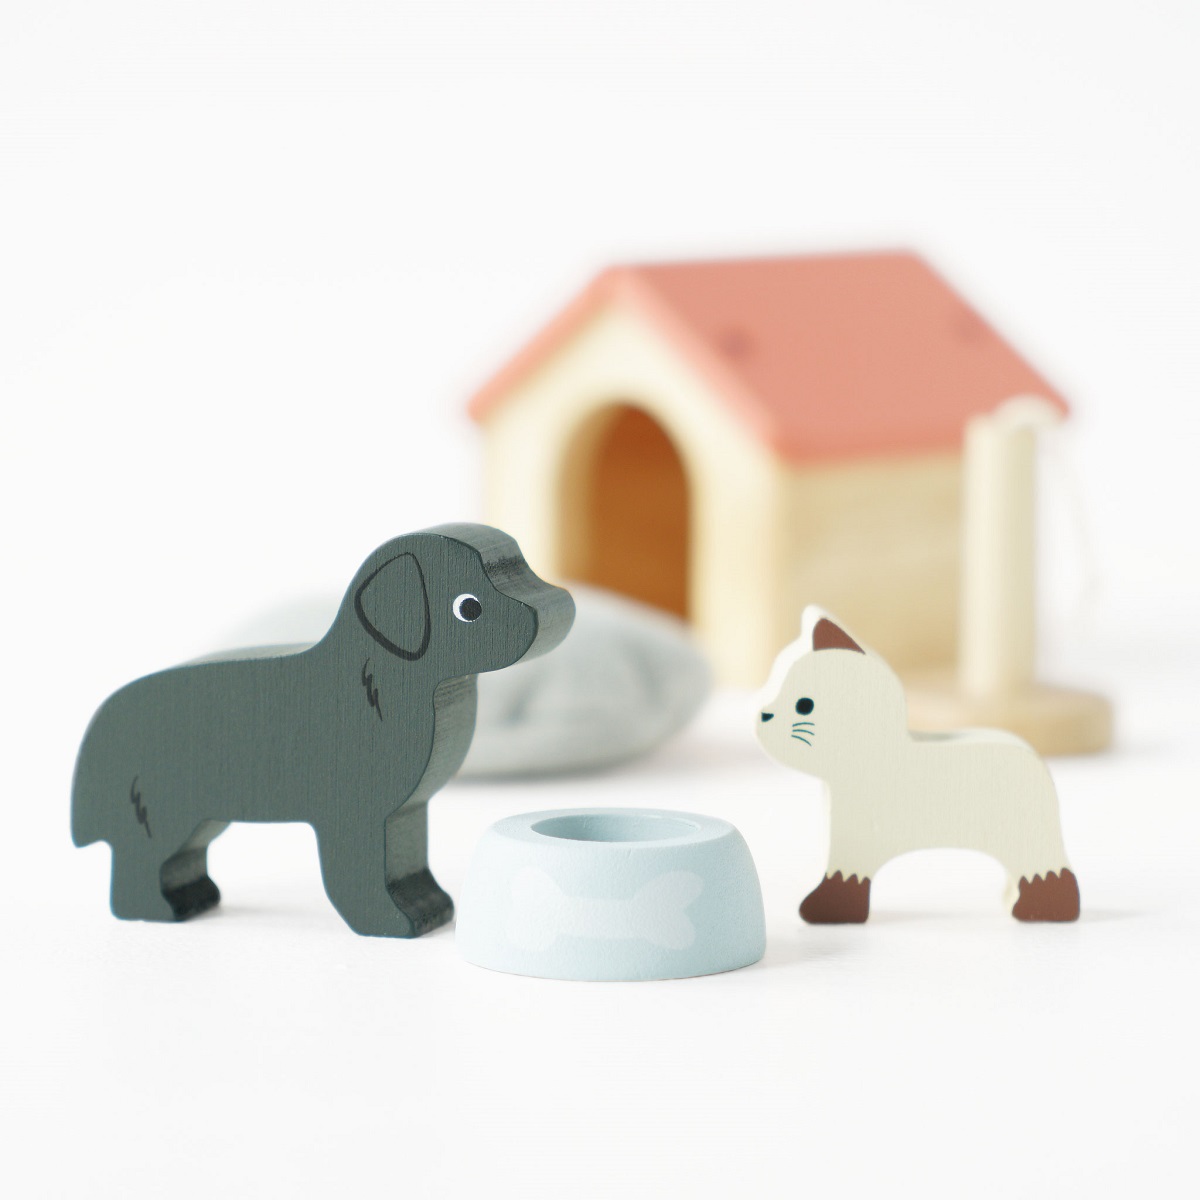 Doll House Pets - Dog & Cat Set